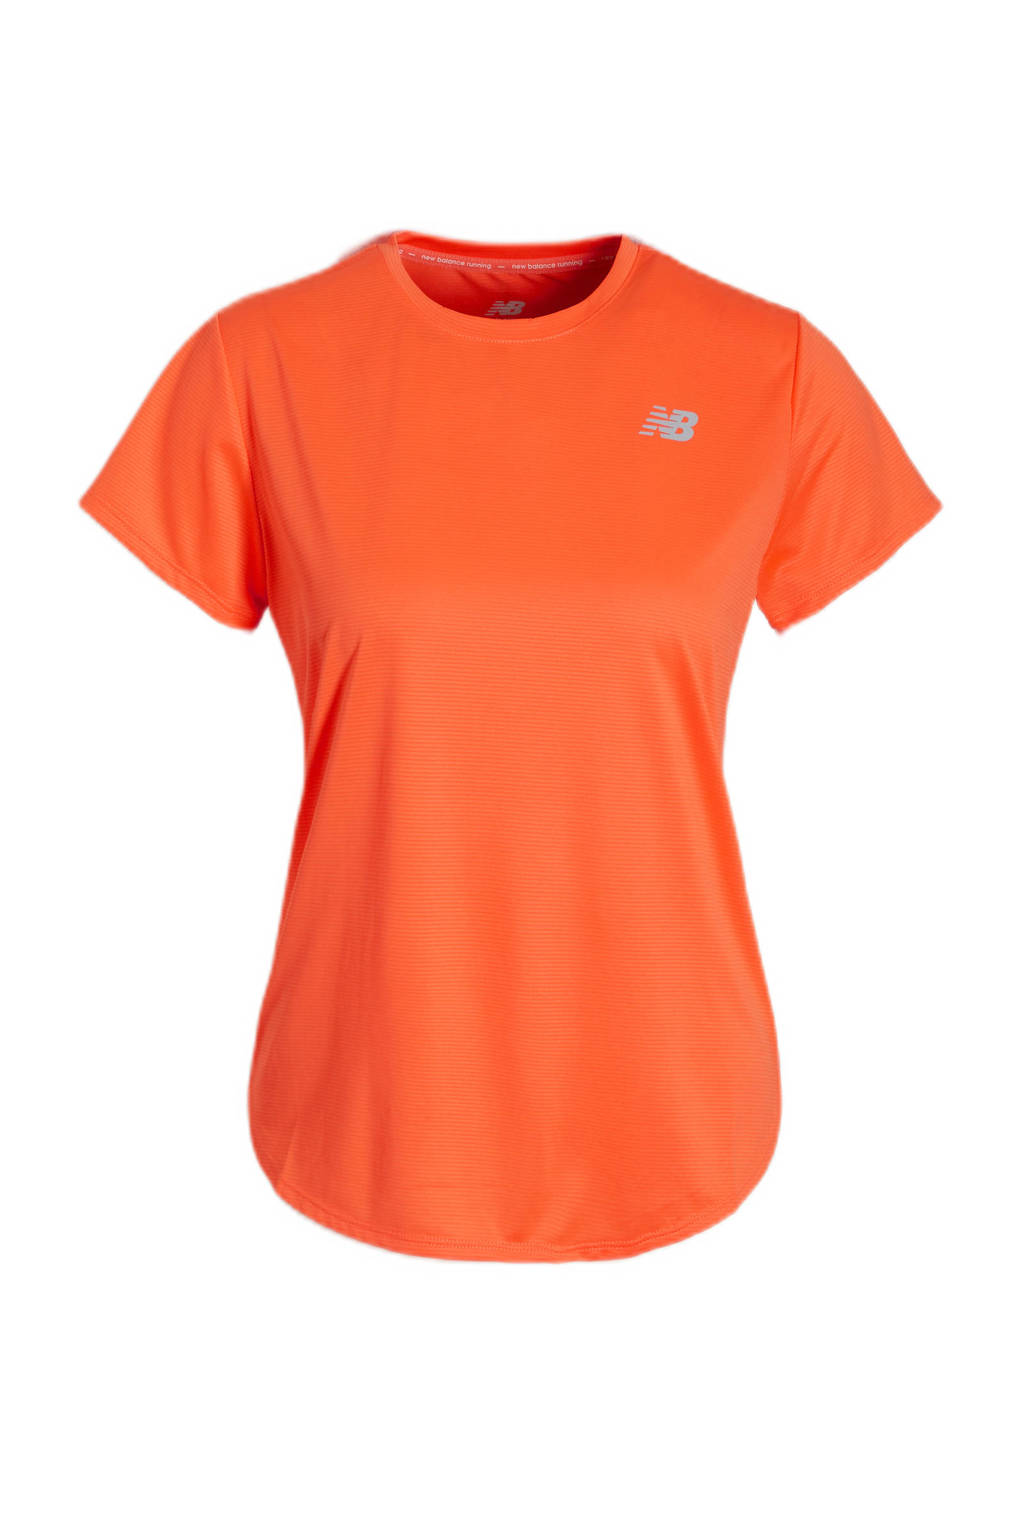 Oranje dames New Balance sport T-shirt van gerecycled polyester met logo dessin, korte mouwen en ronde hals